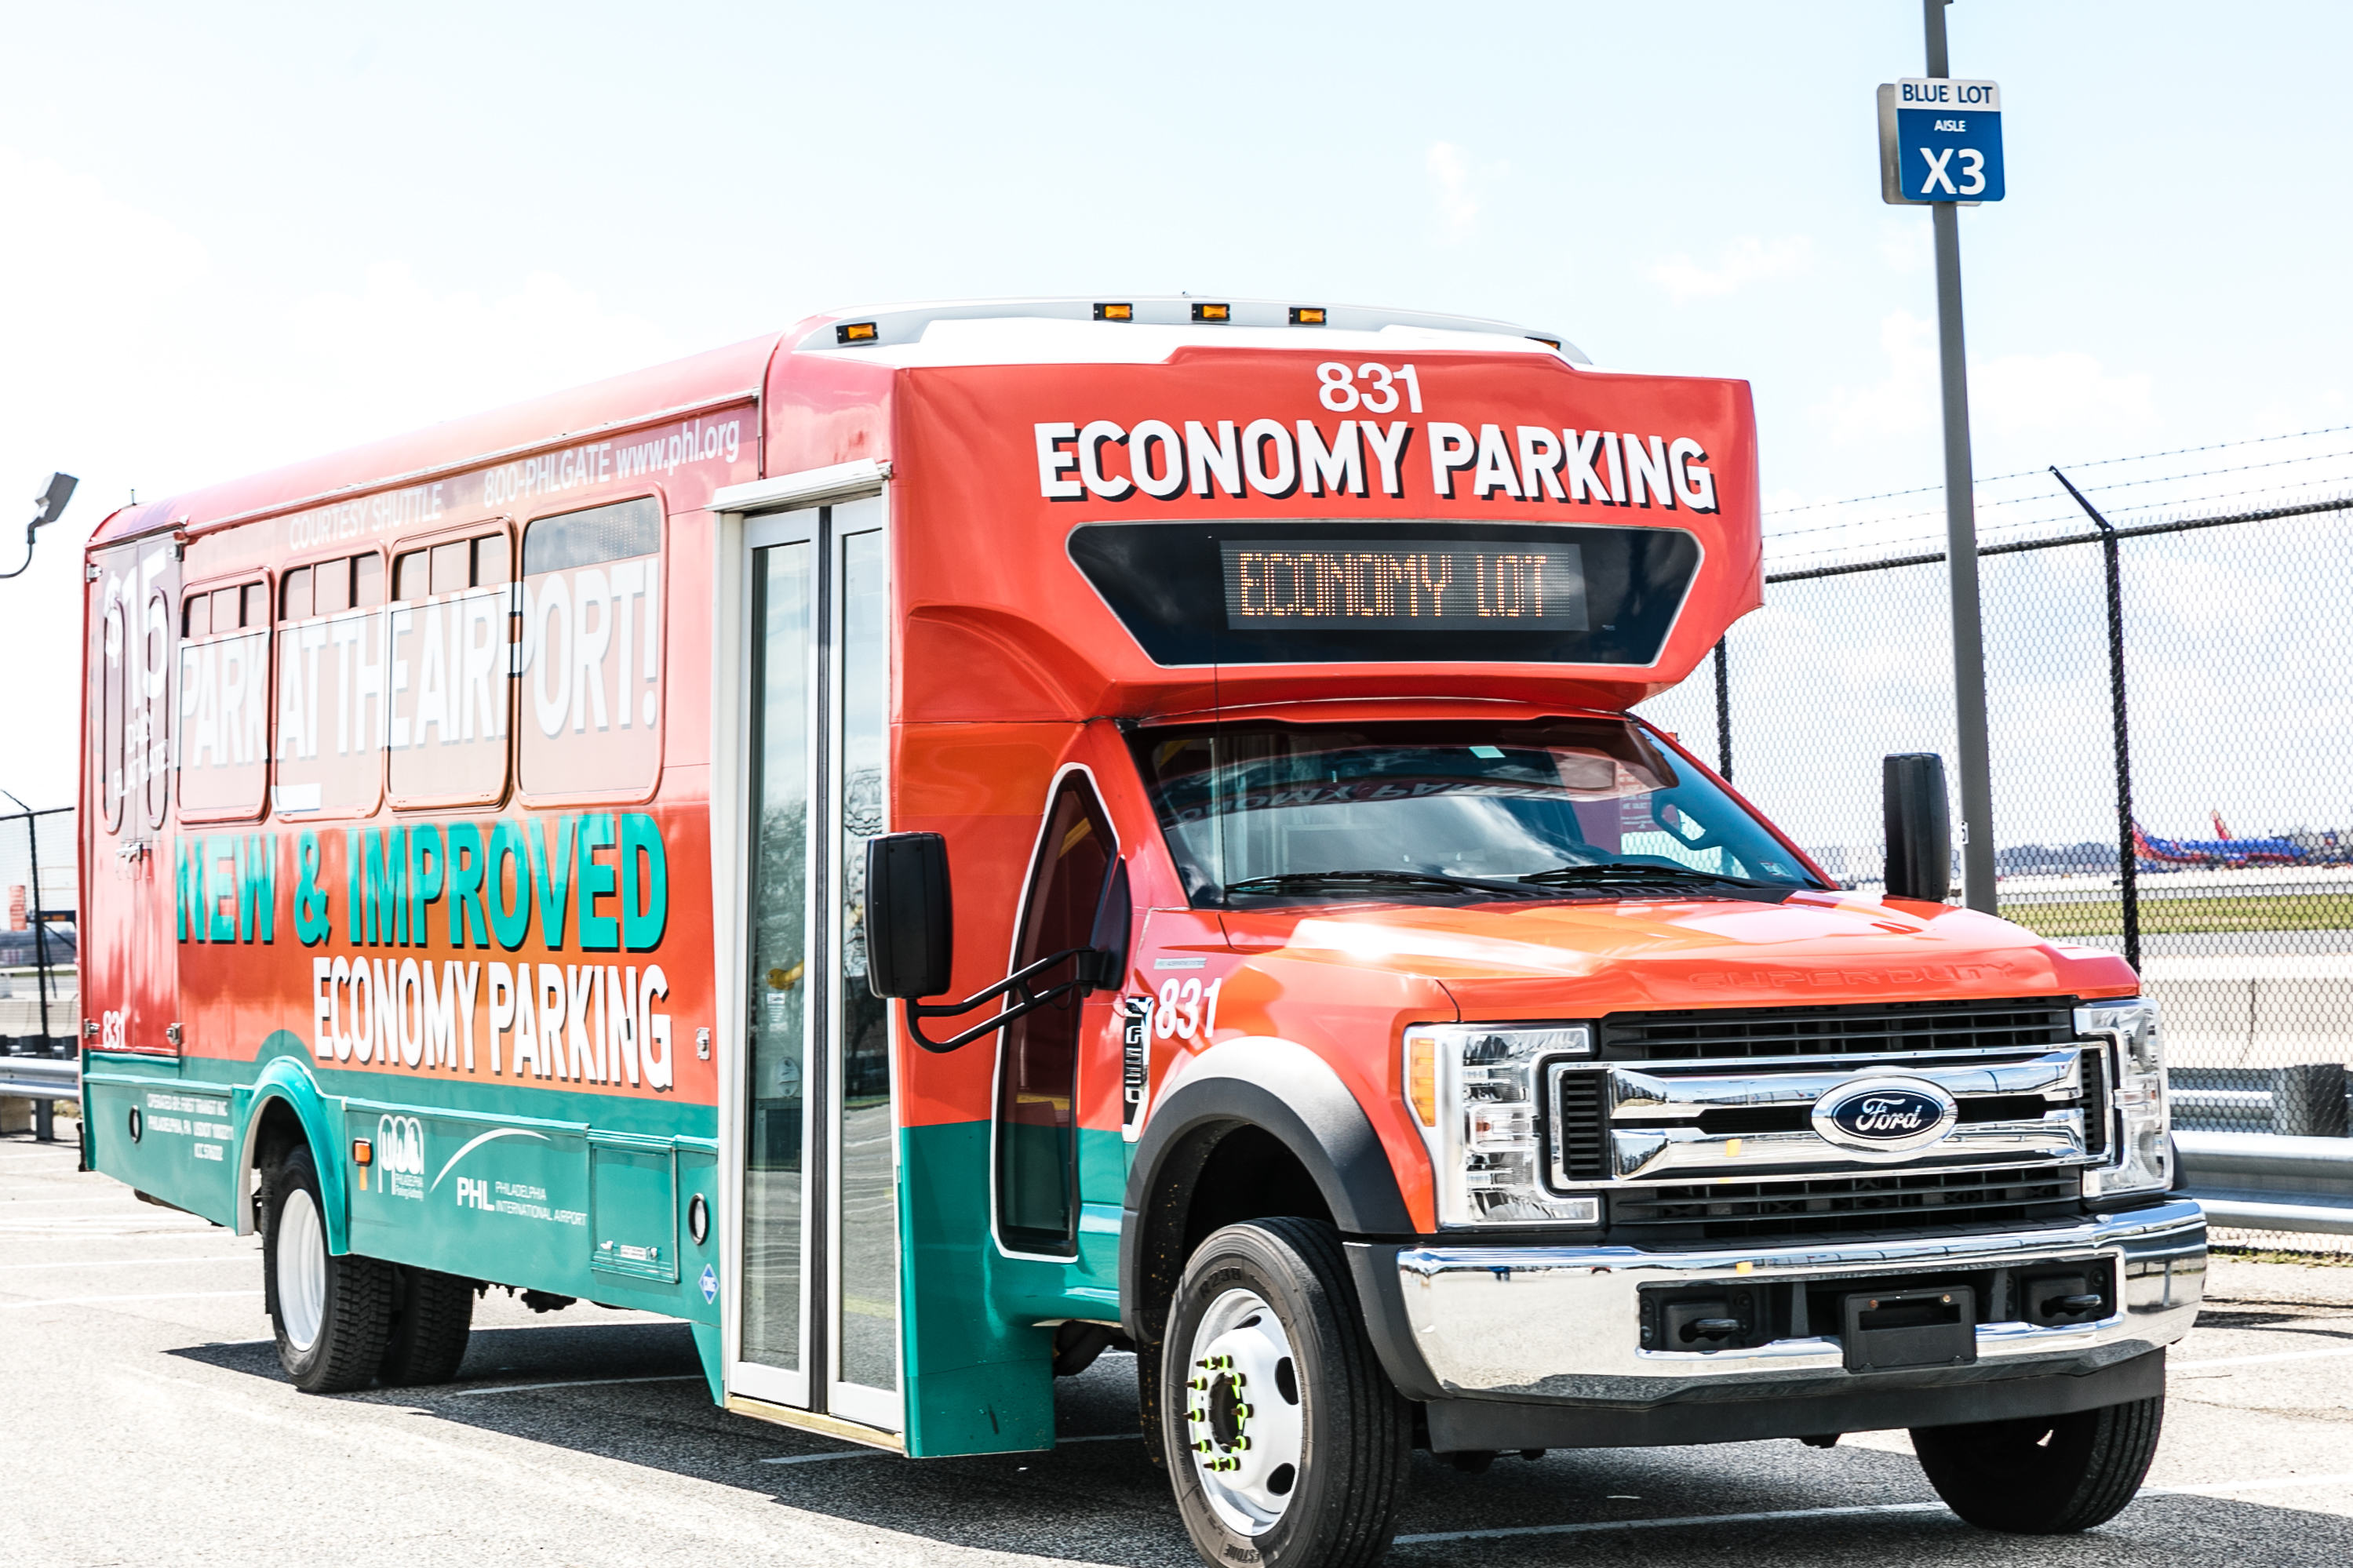 Economy parking lot bus